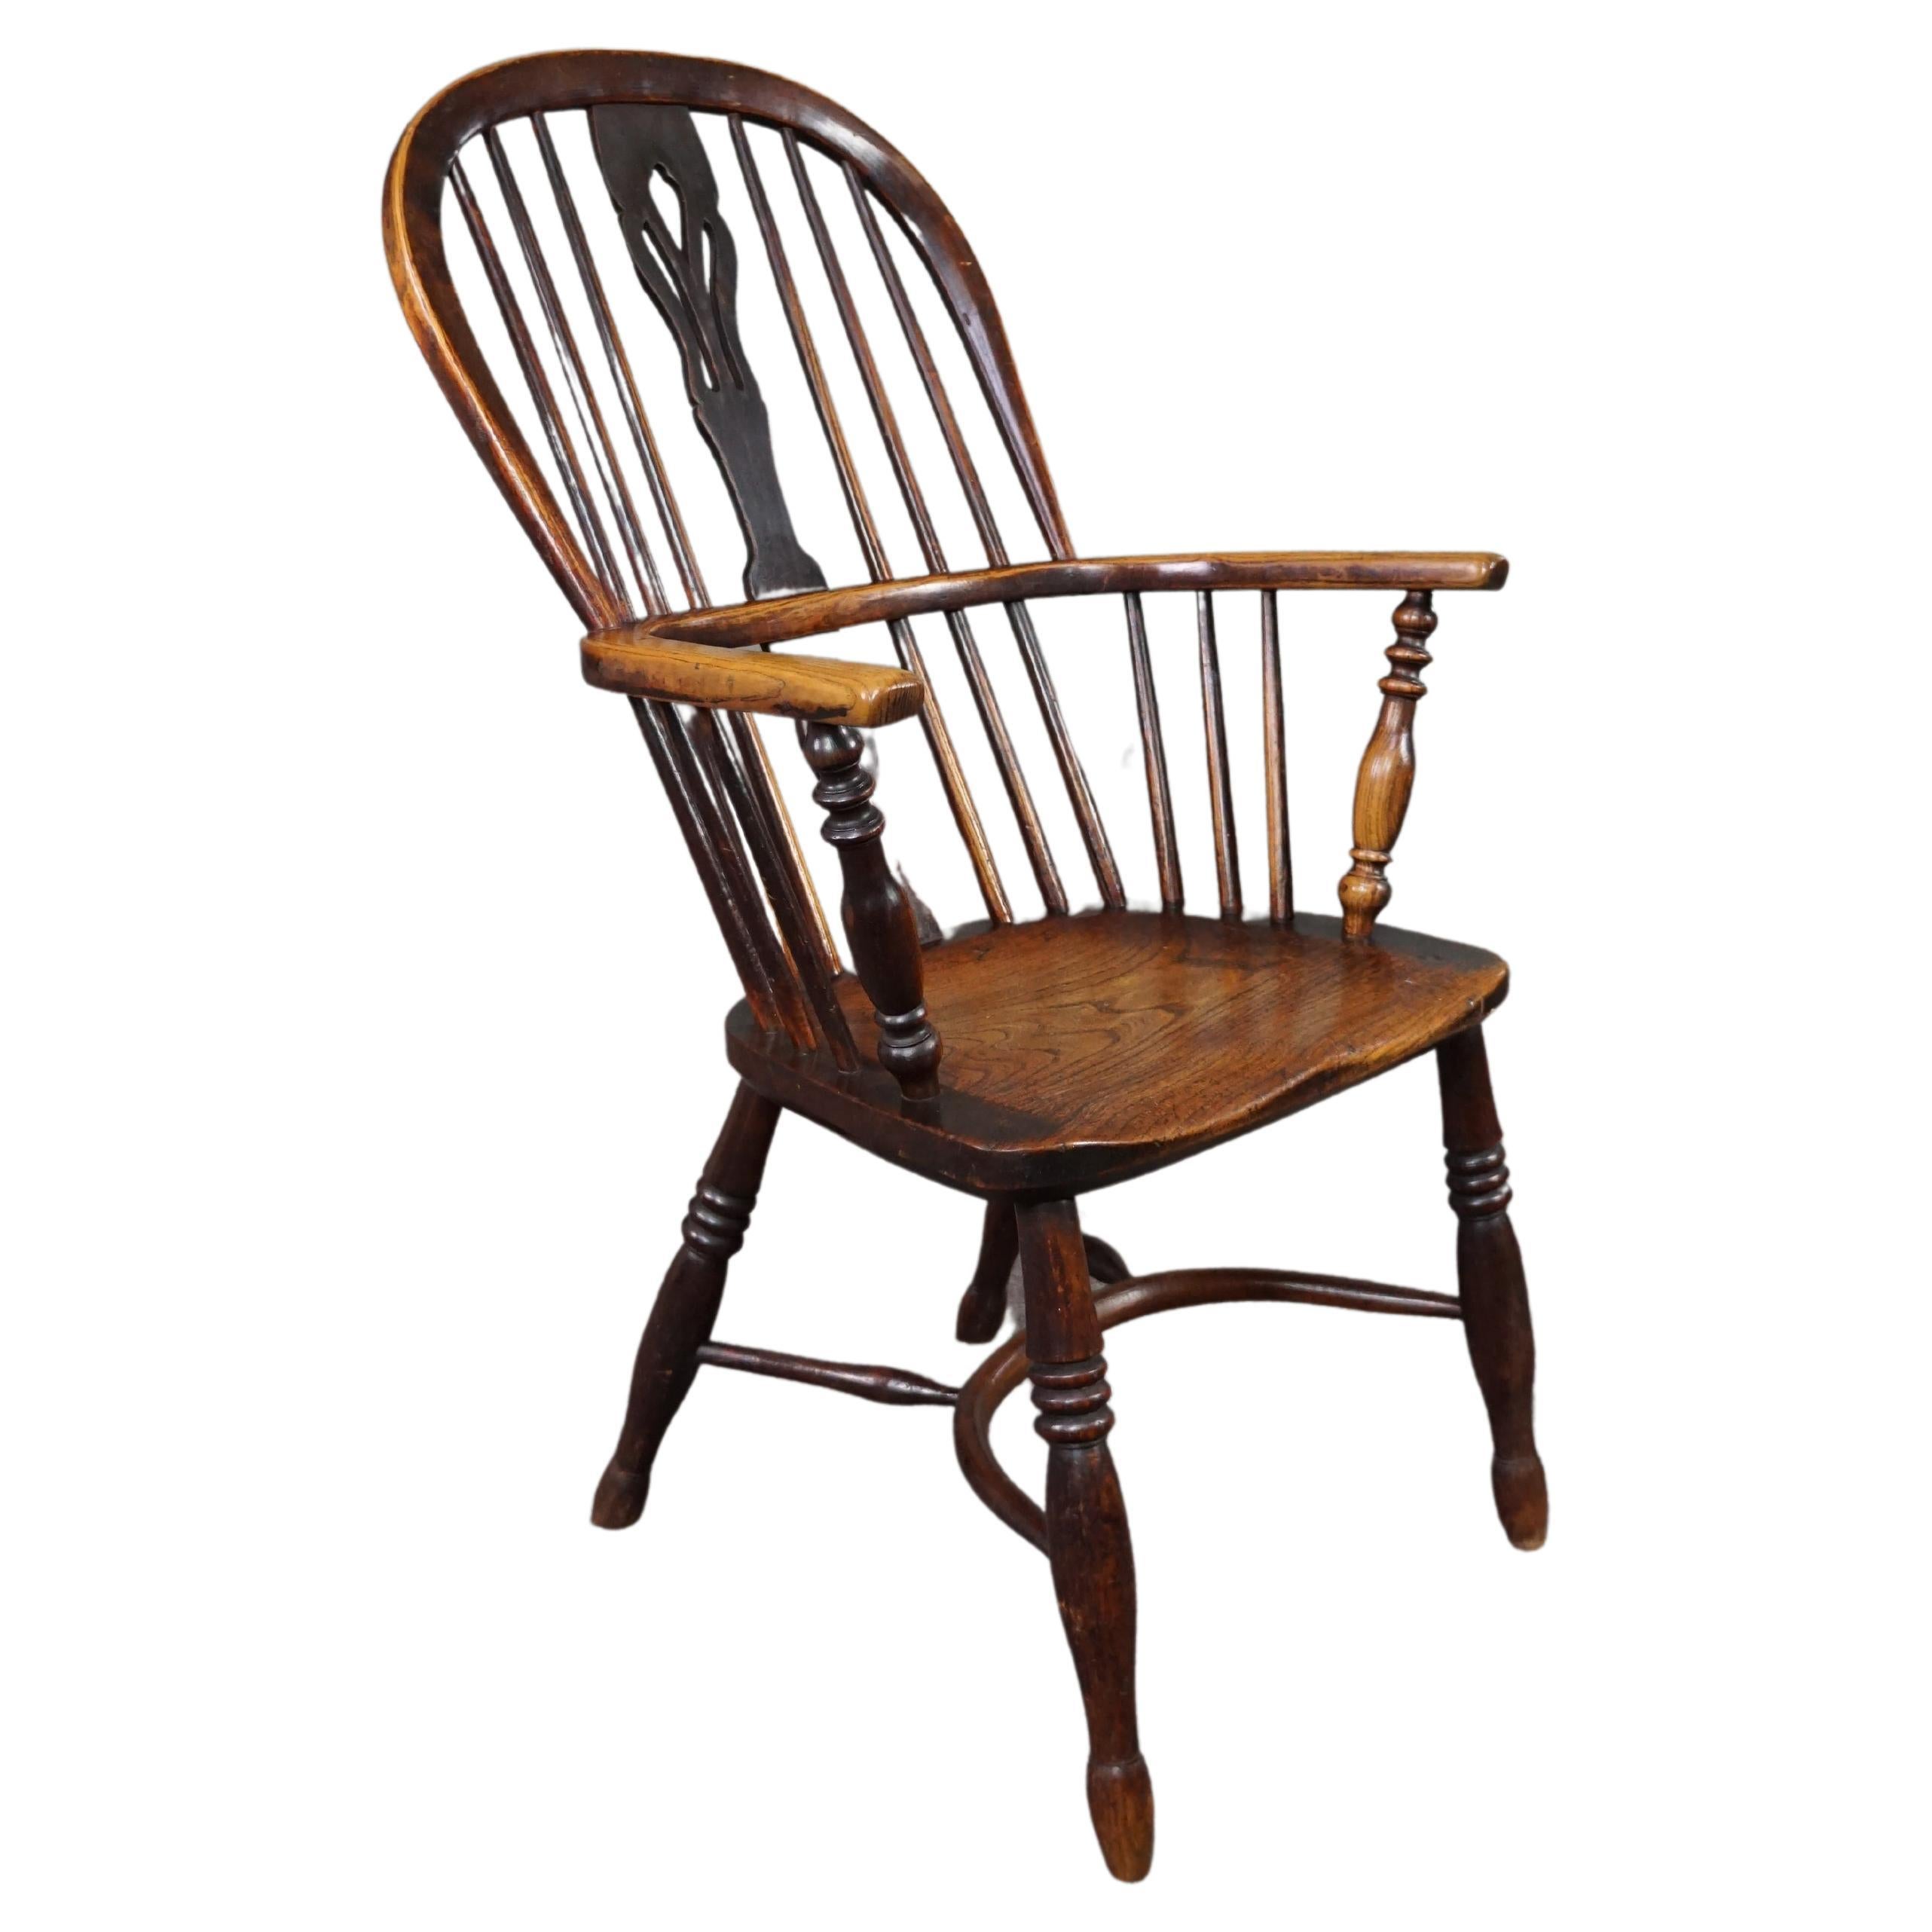 Englischer antiker Windsor-Sessel/Sessel mit hoher Rückenlehne, 18. Jahrhundert